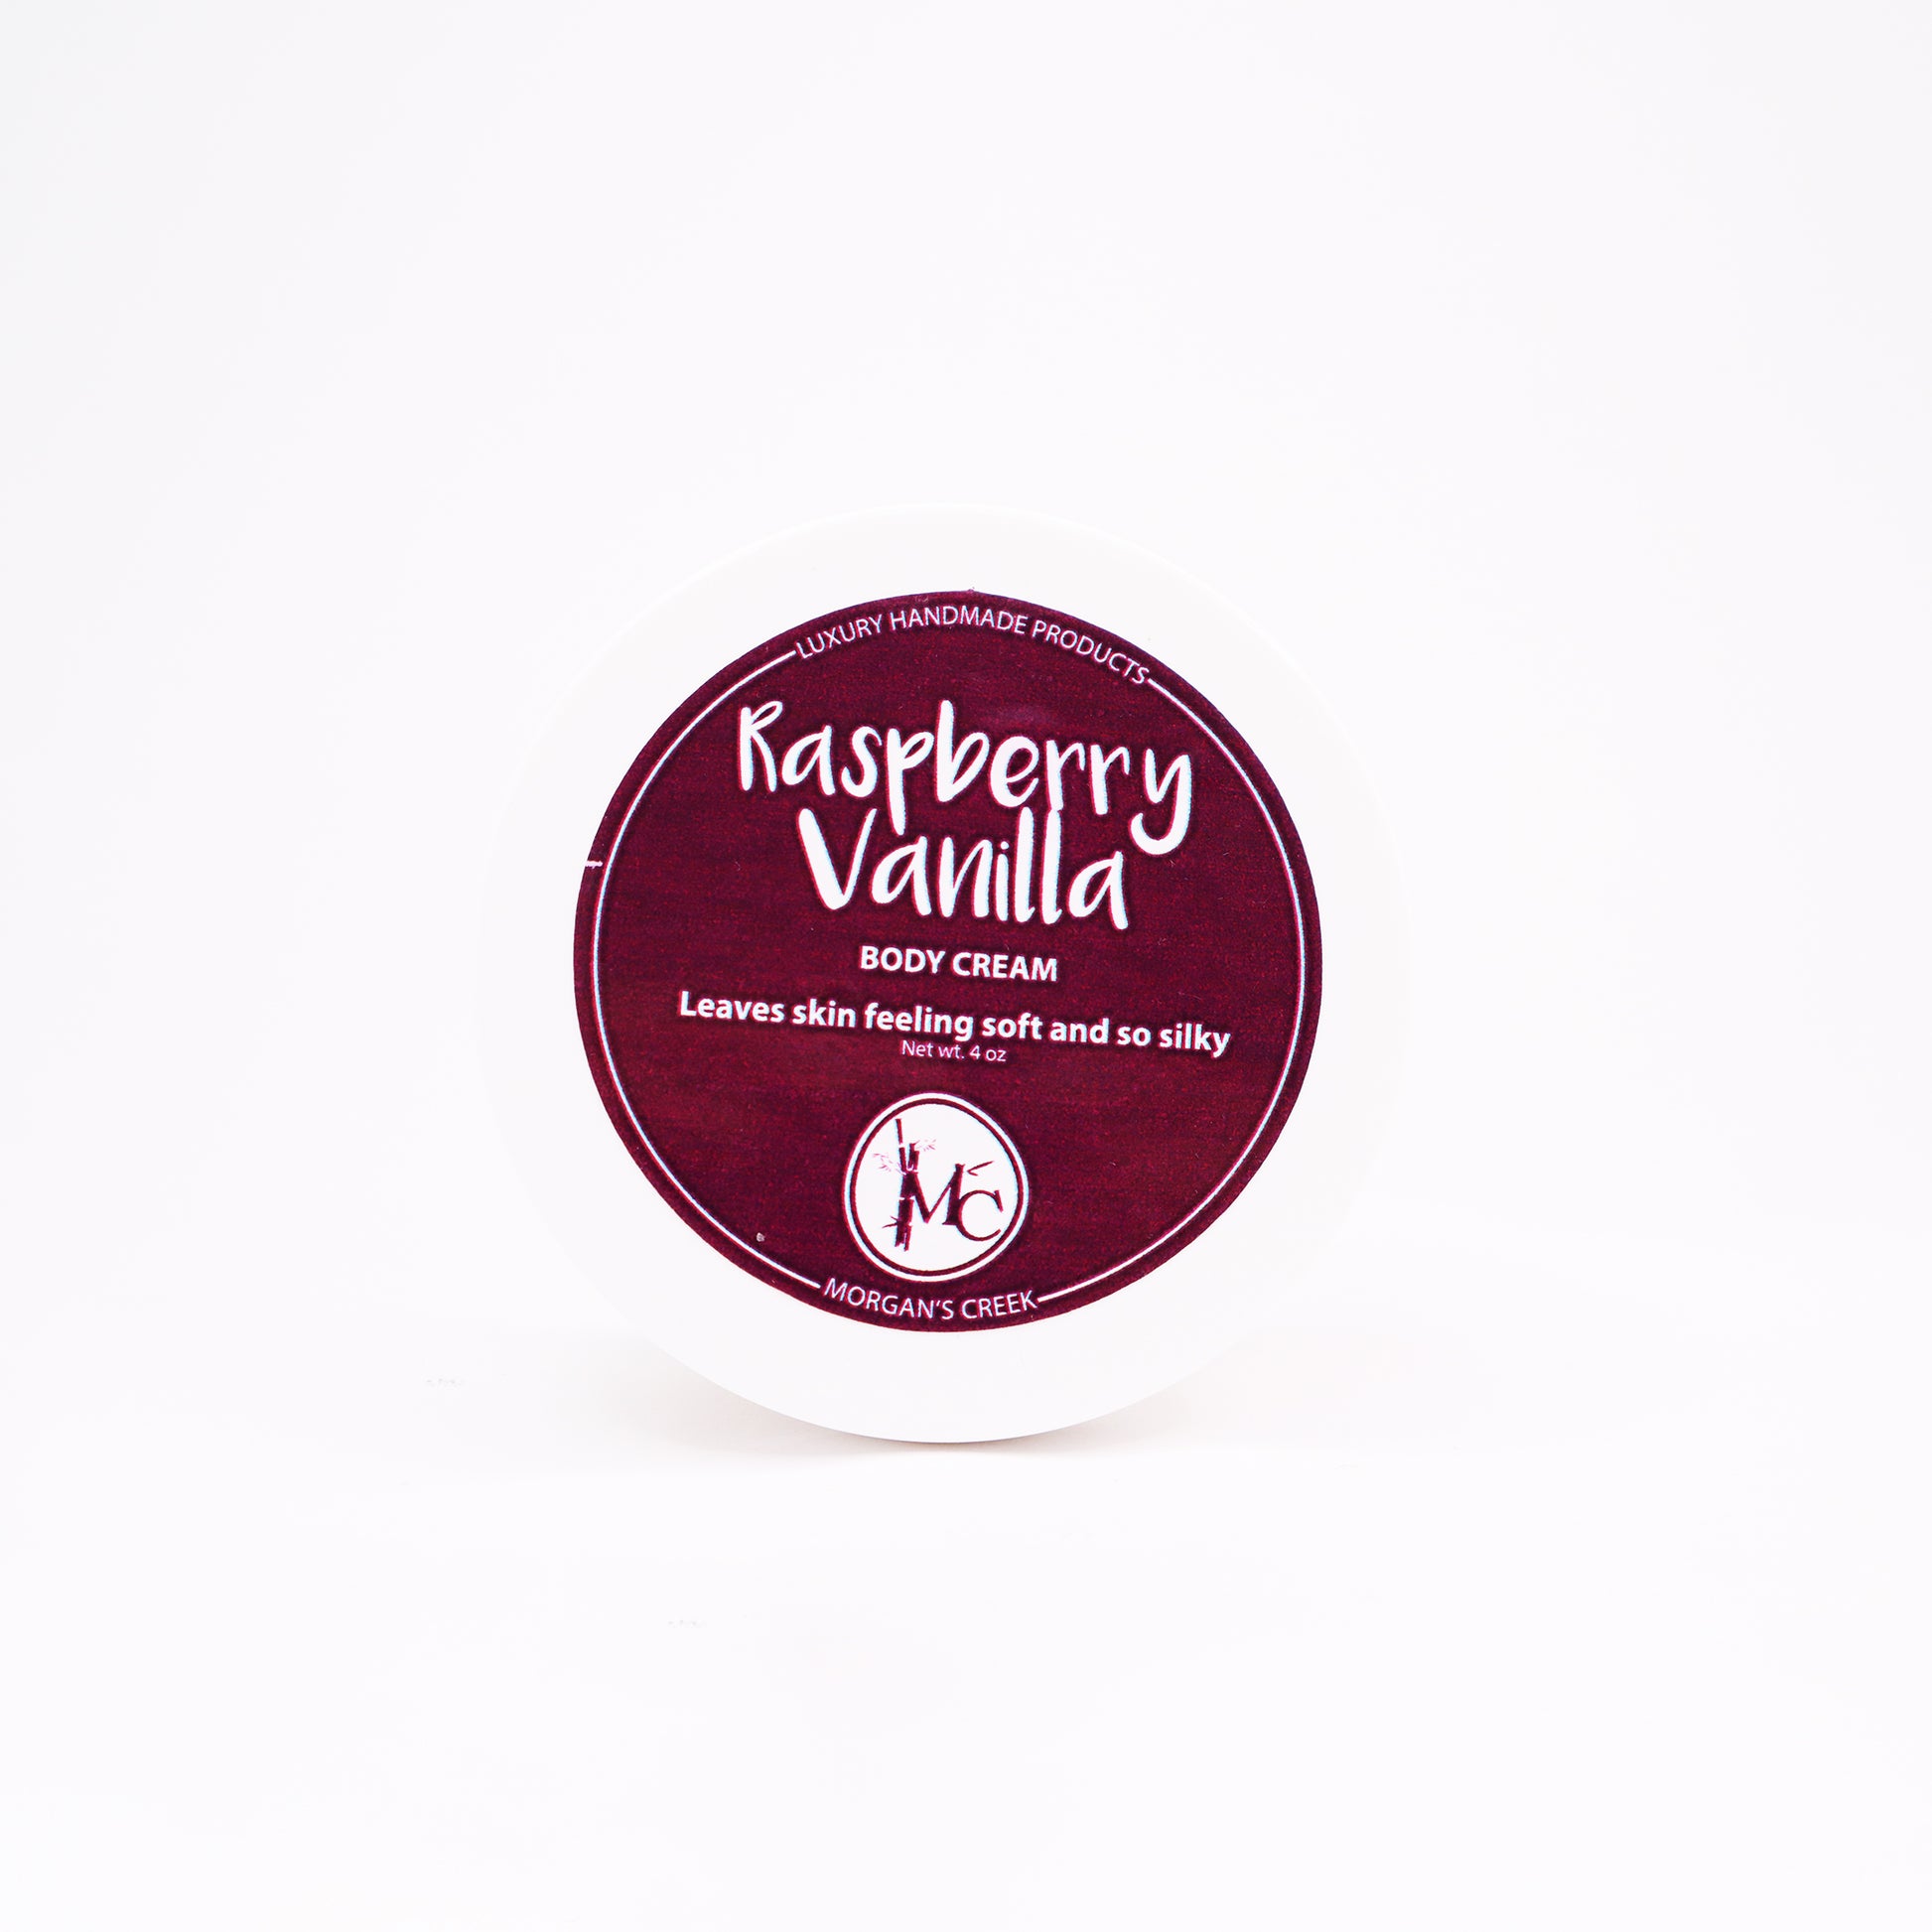 Raspberry Vanilla Body Cream by Morgan's Creek